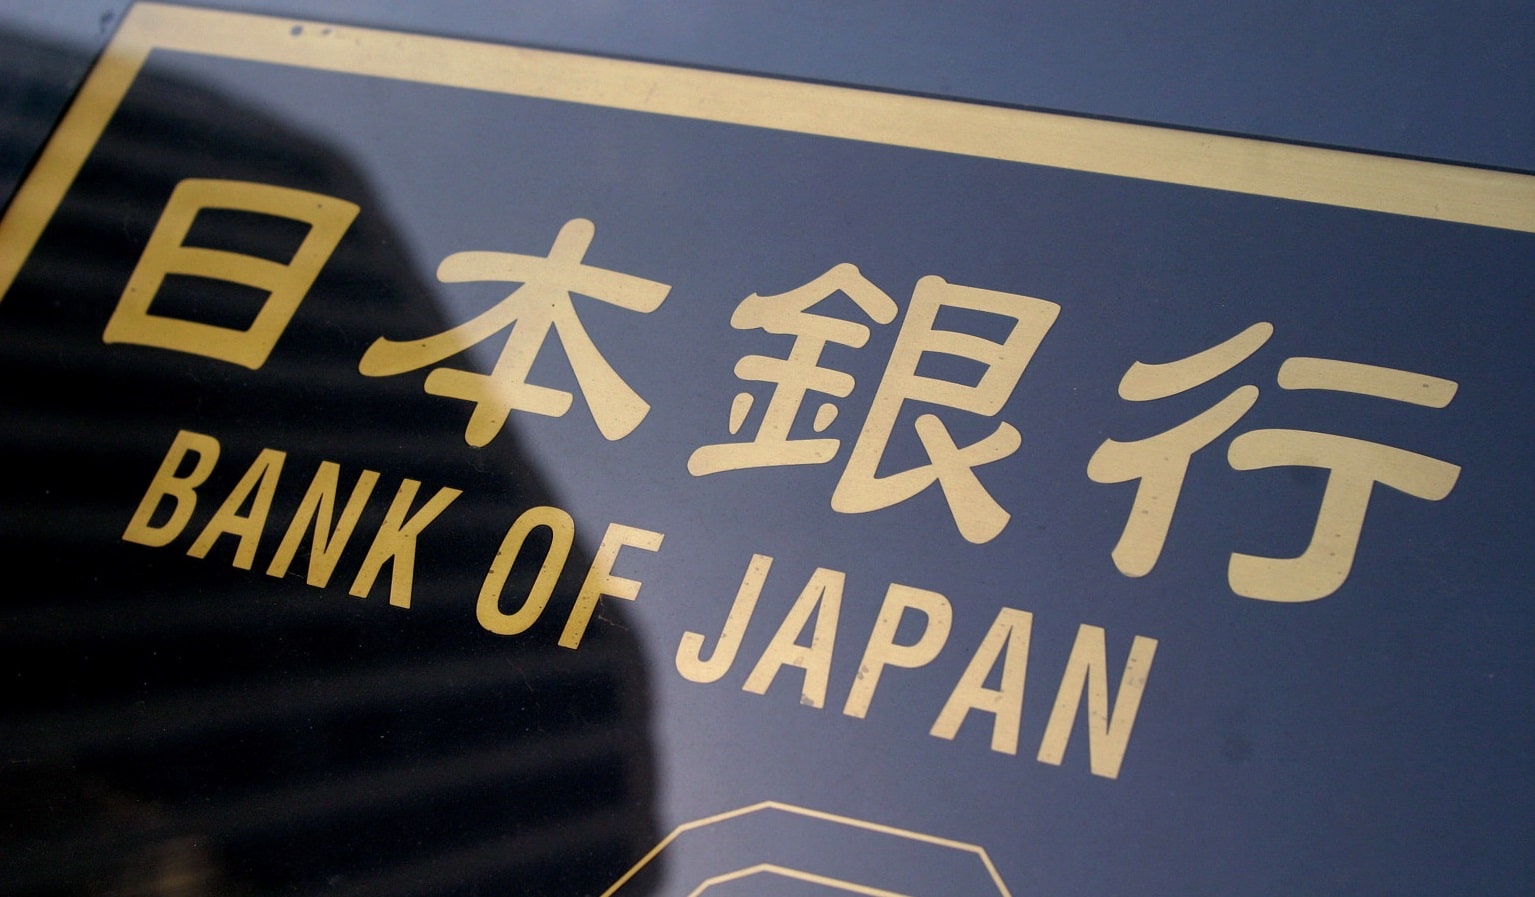 ‘Libra ของ Facebook จะทำให้เศรษฐกิจของประเทศอ่อนแอ’ กล่าวโดย อดีตผู้บริหารธนาคารแห่งญี่ปุ่น (BoJ)